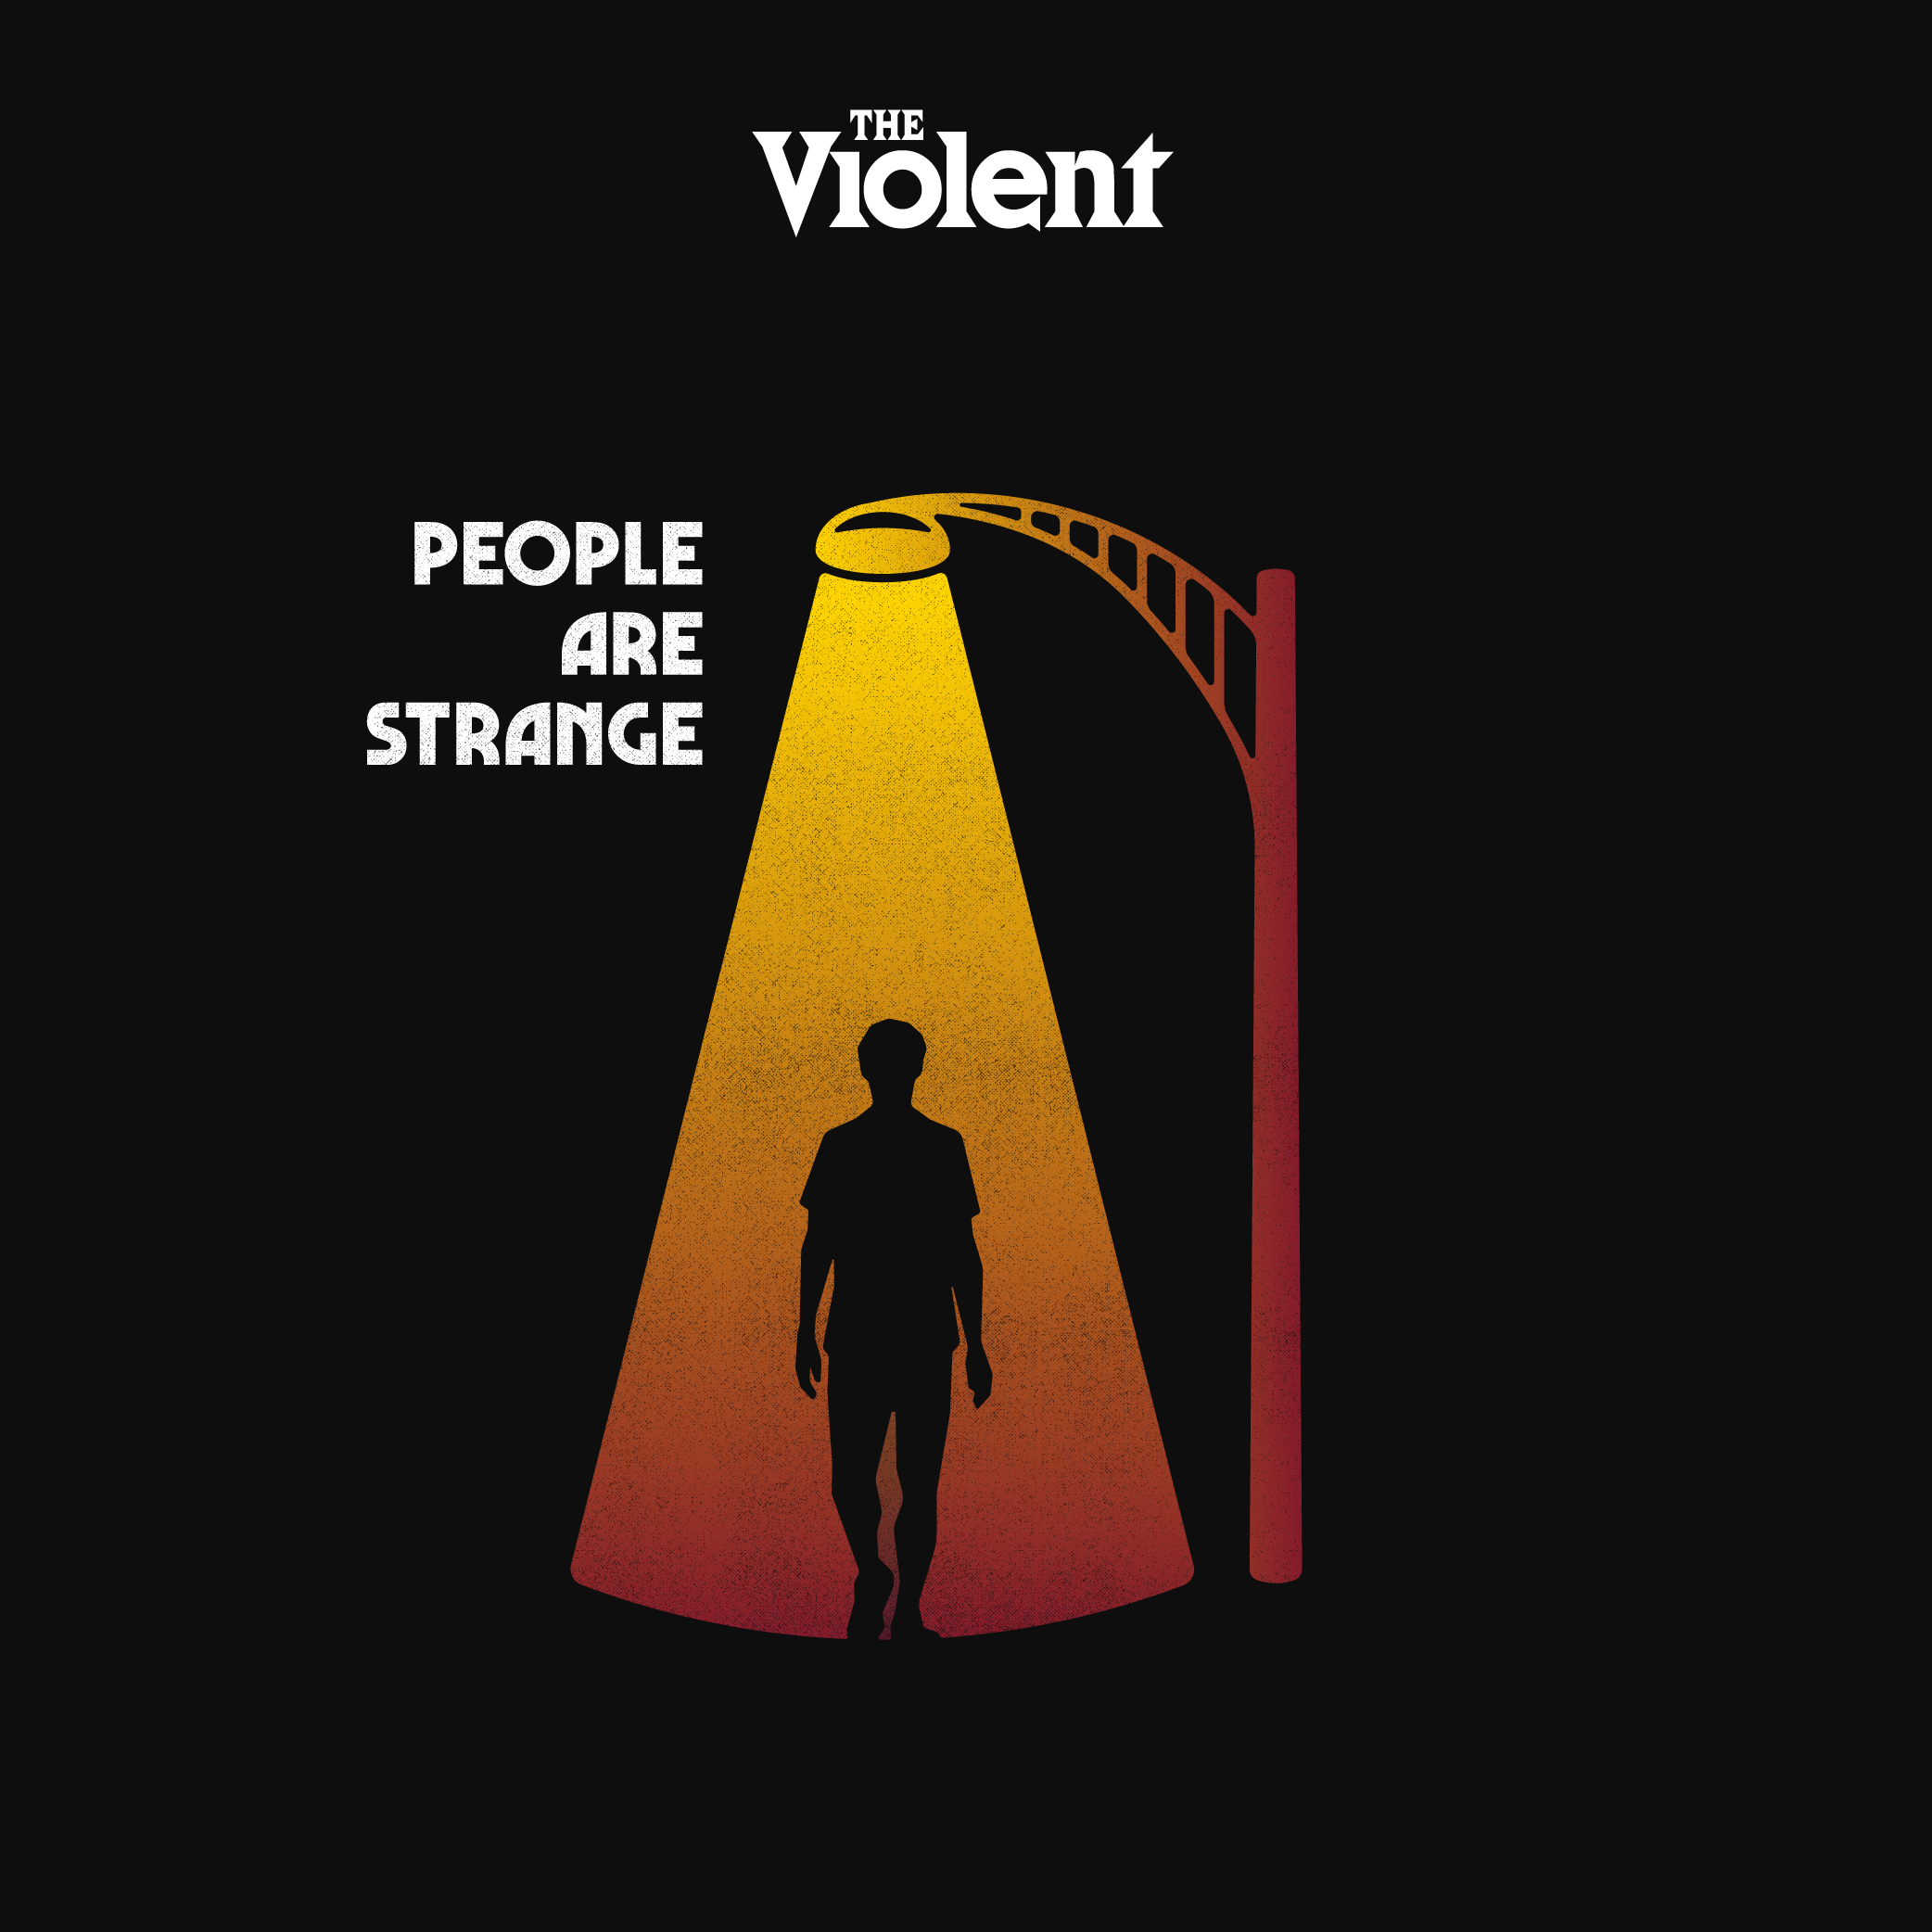 The Violent People are Strange cover artwork